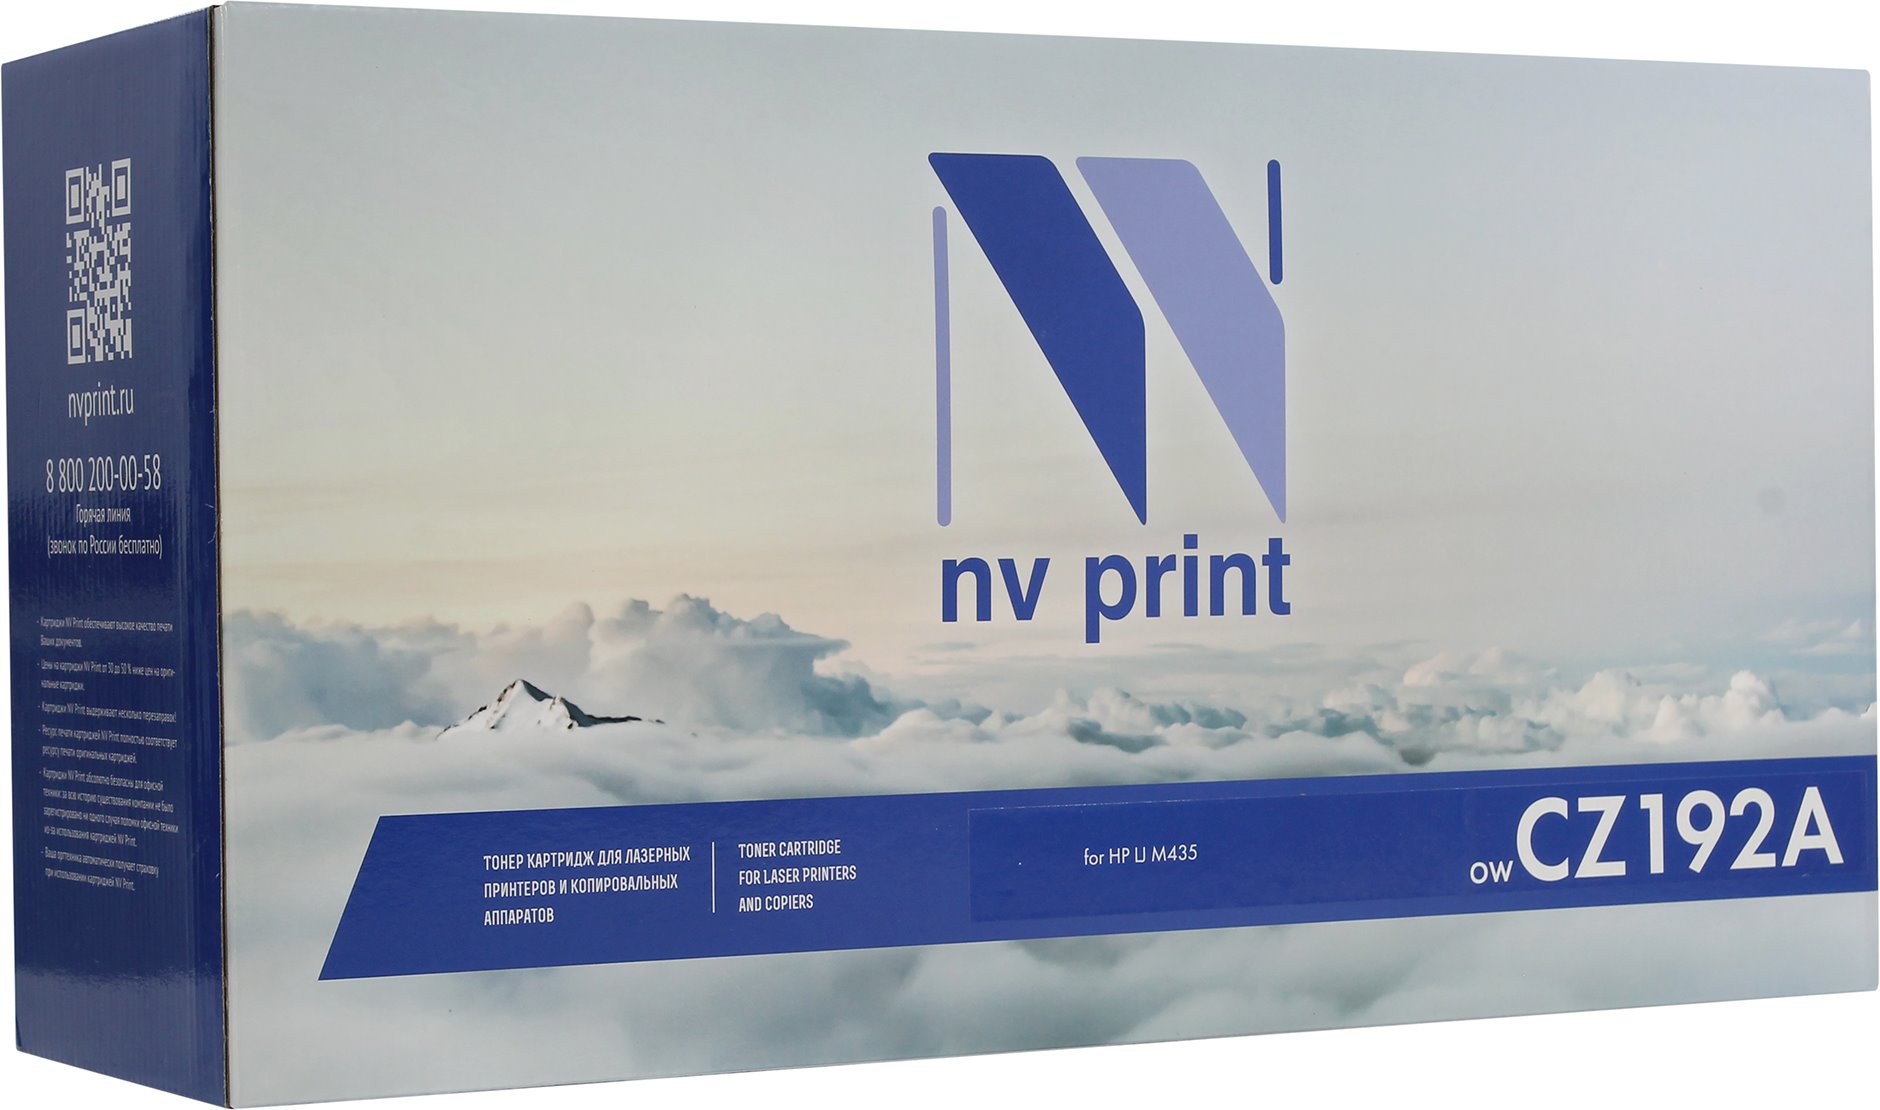   NV-Print  HP LaserJet Pro M435, CZ192A